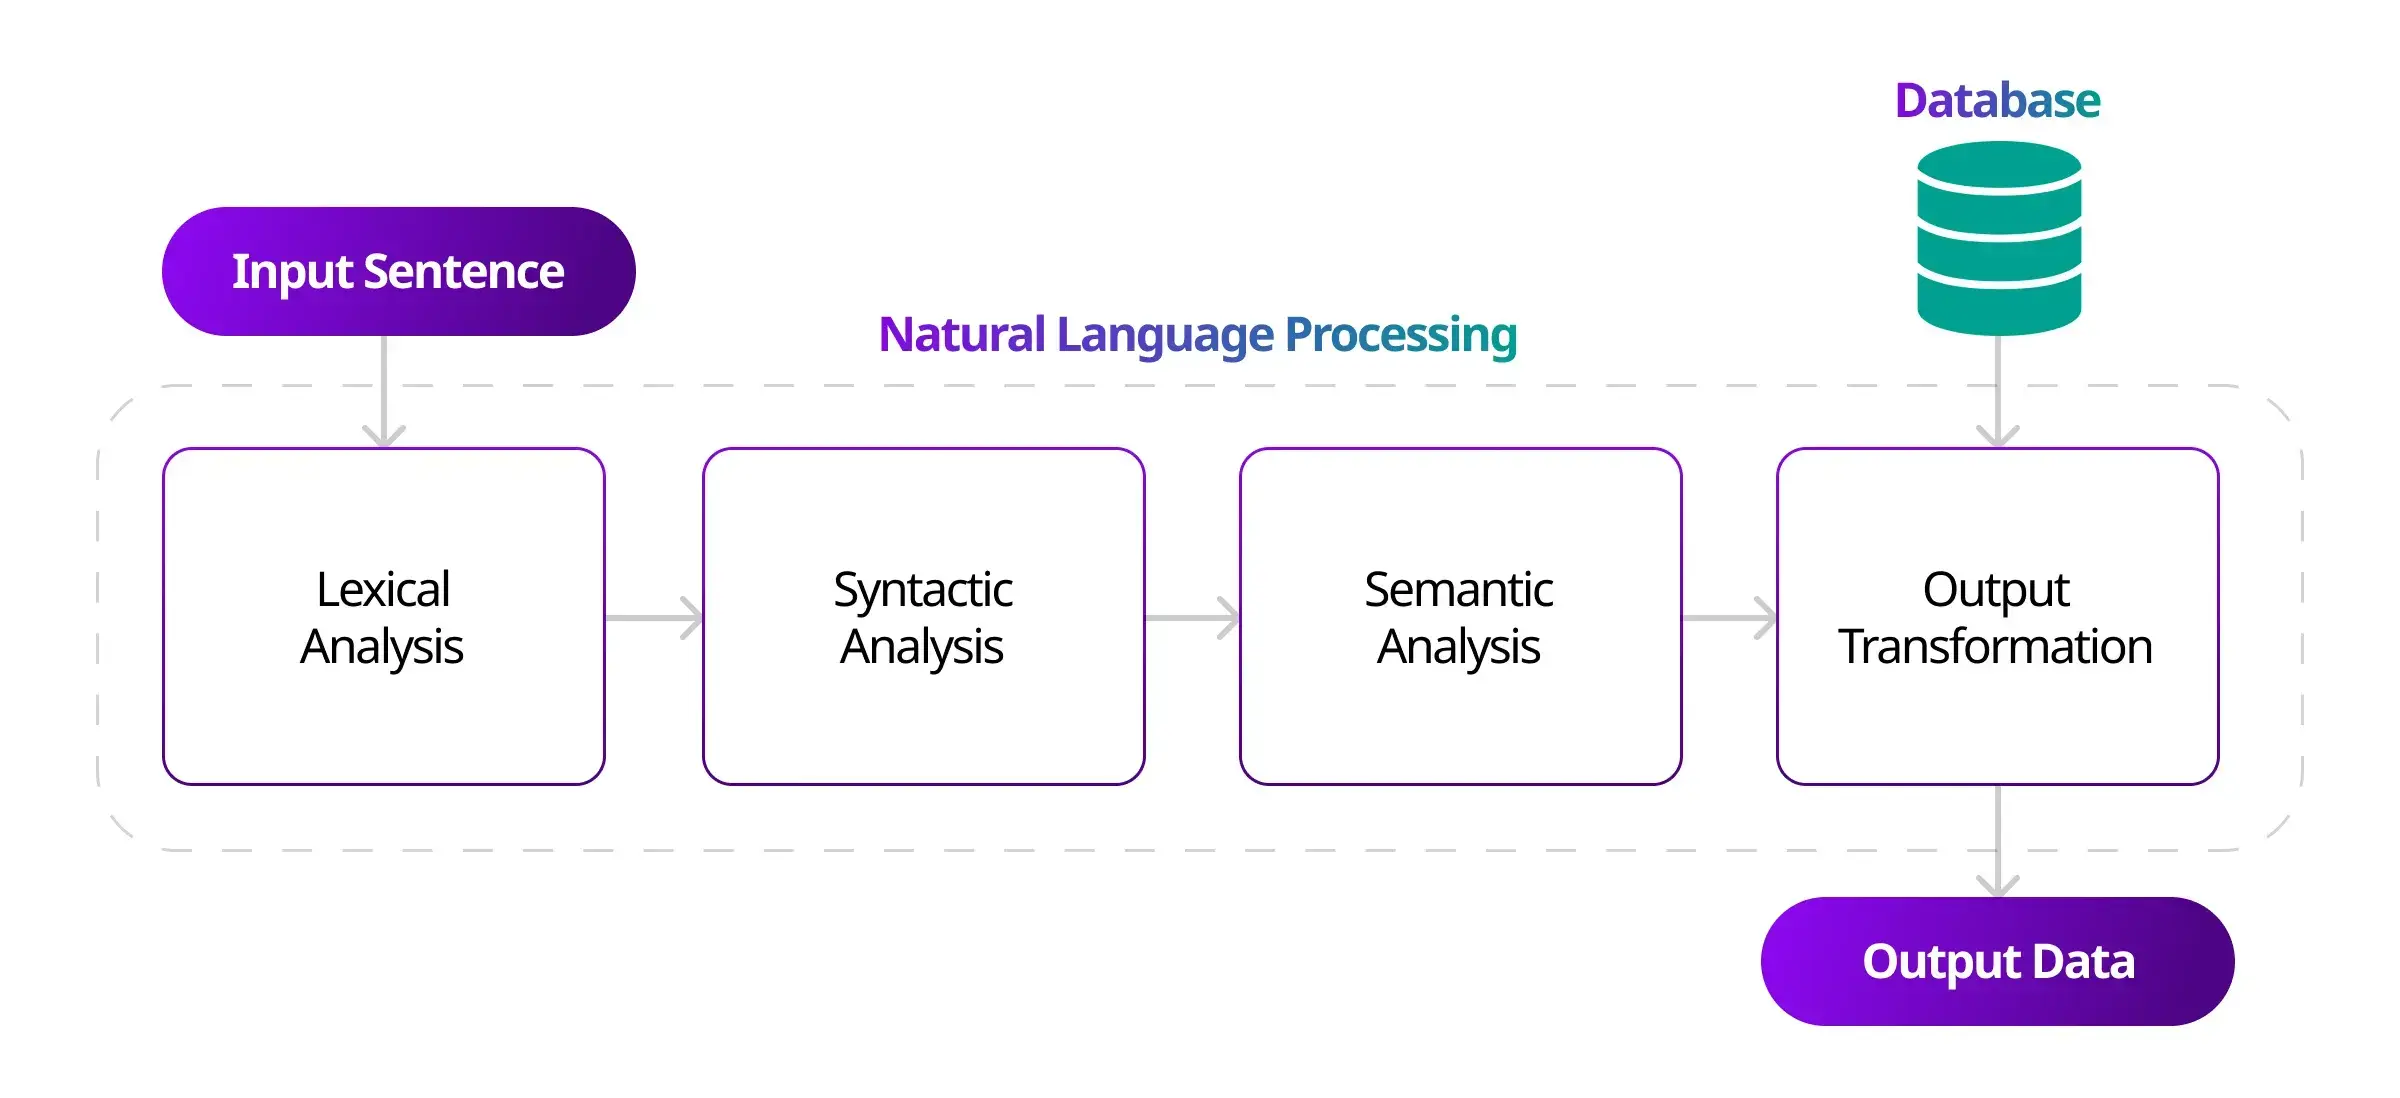 Progressive Language Processing - Next-Generation AI Systems